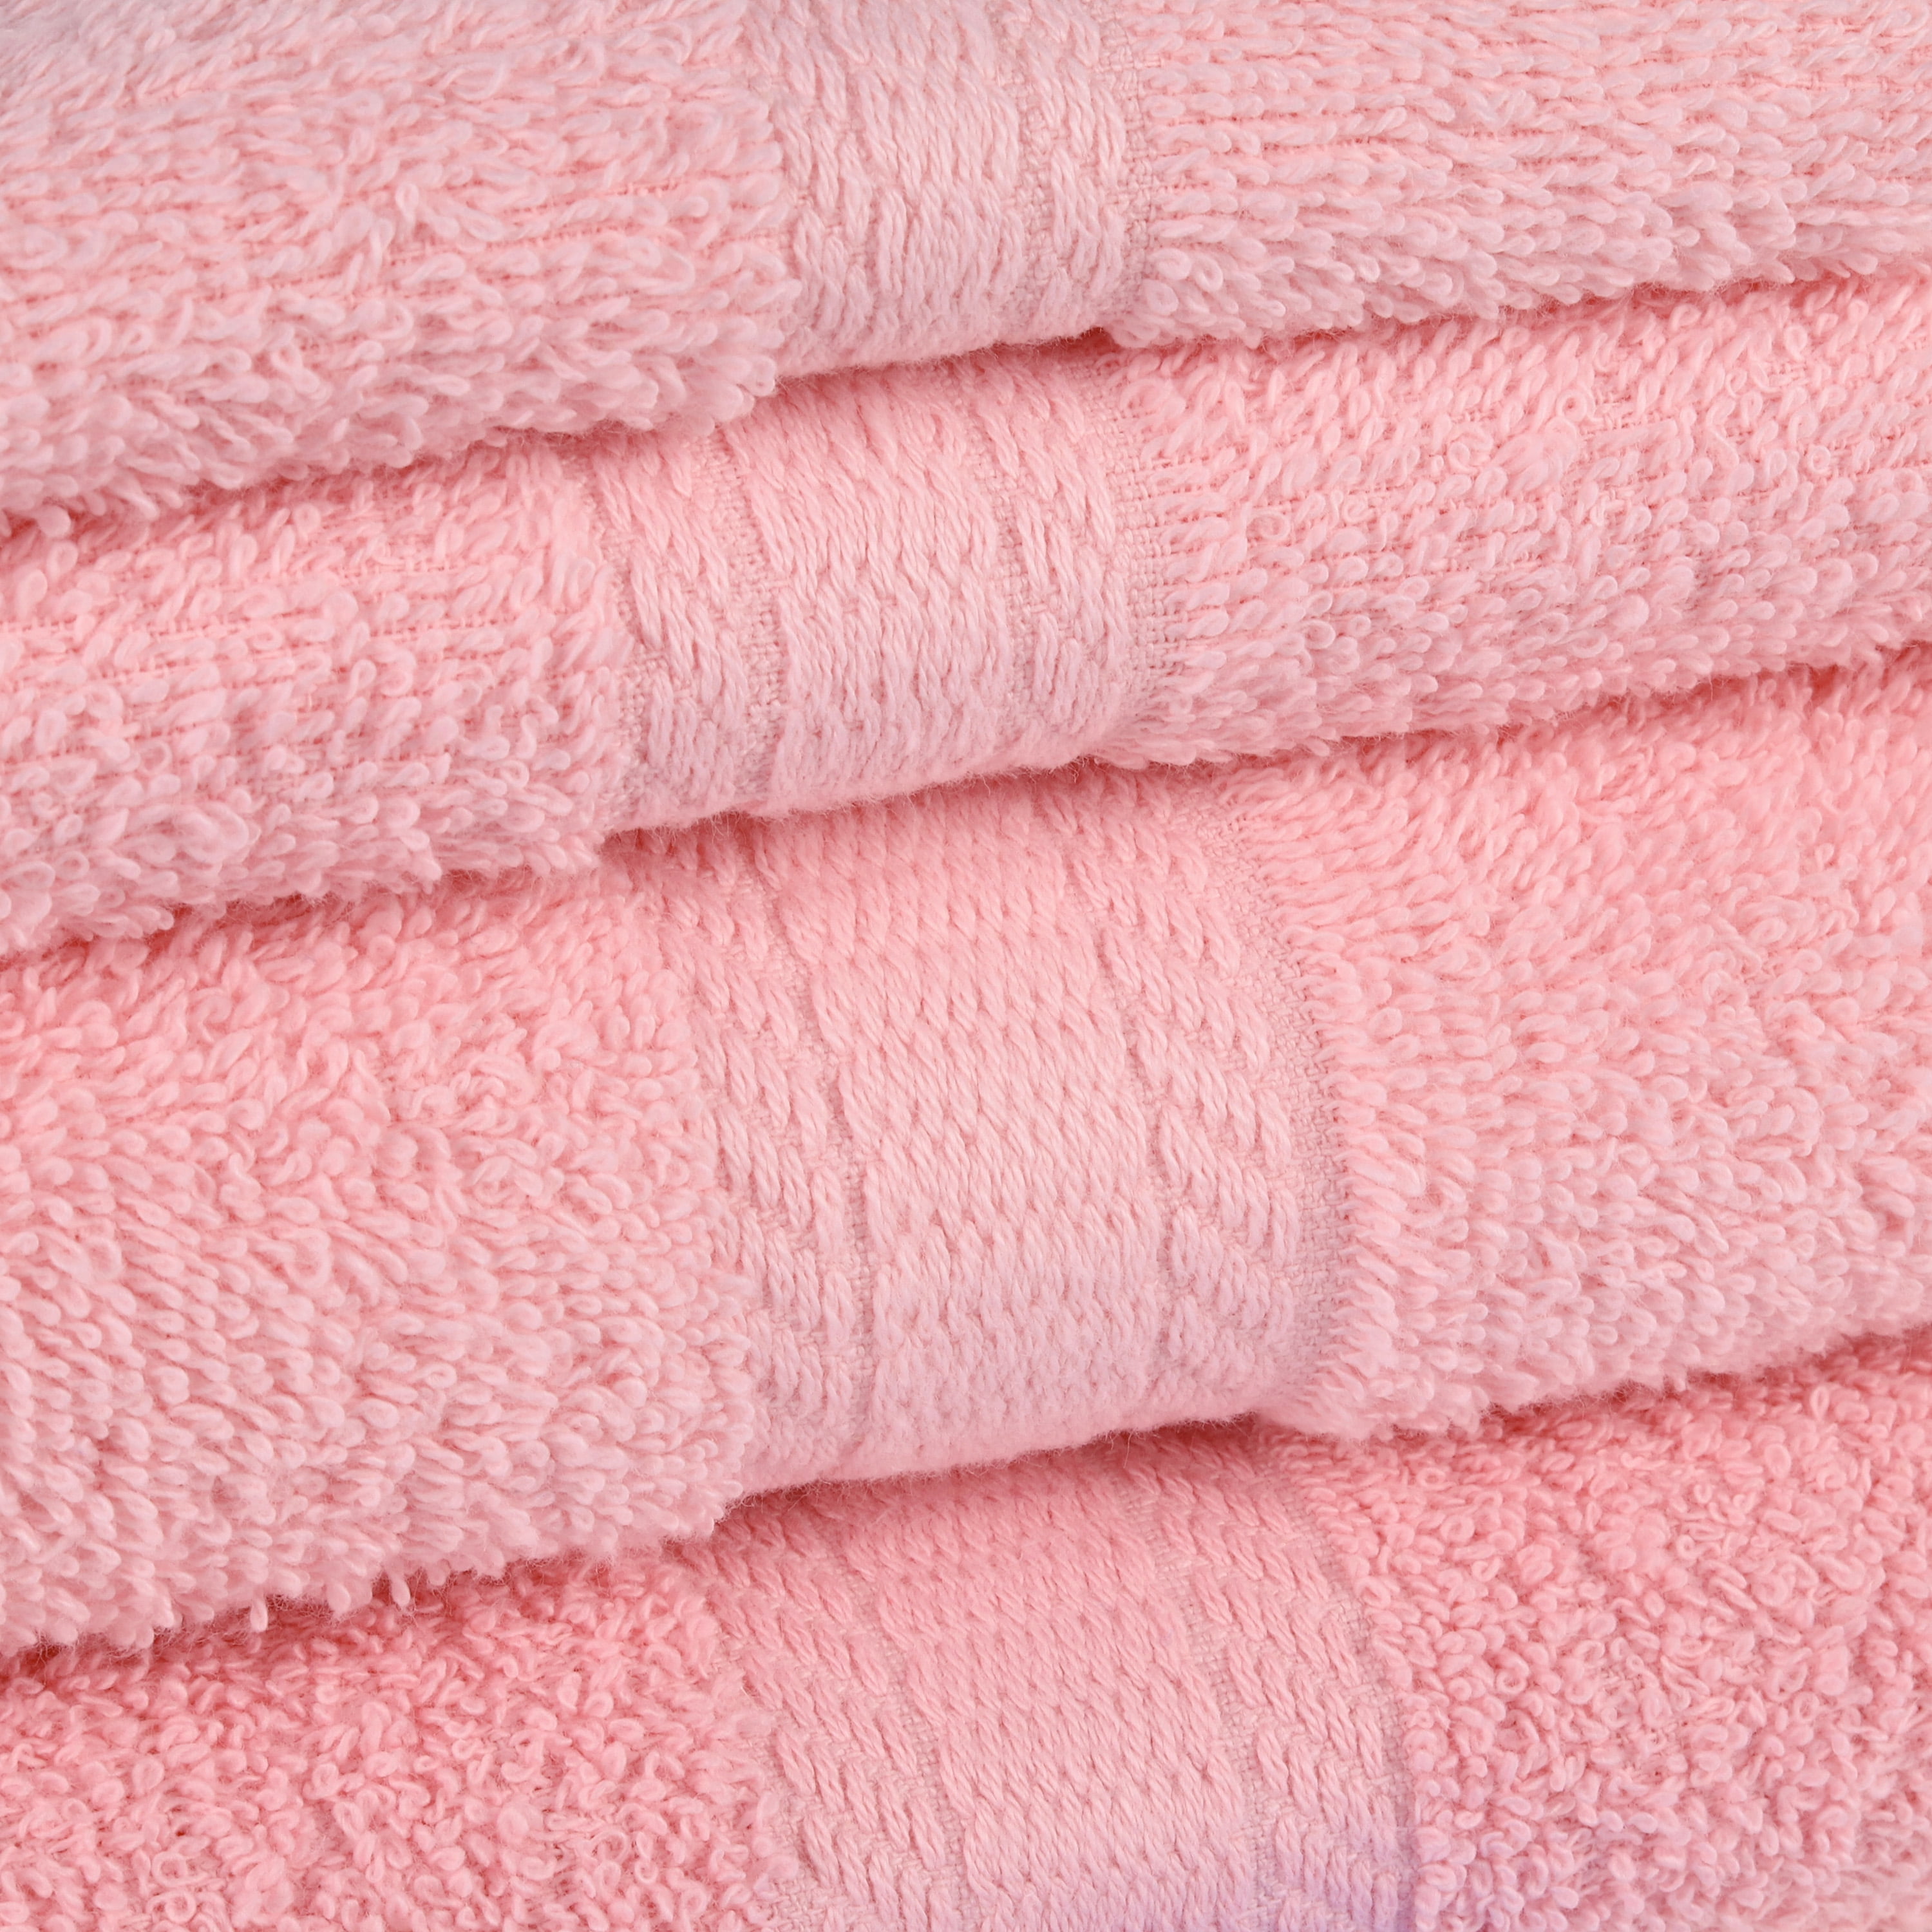 Linenspa Essentials 6-Piece Light Pink Cotton Bath Towel Set in the Bathroom  Towels department at